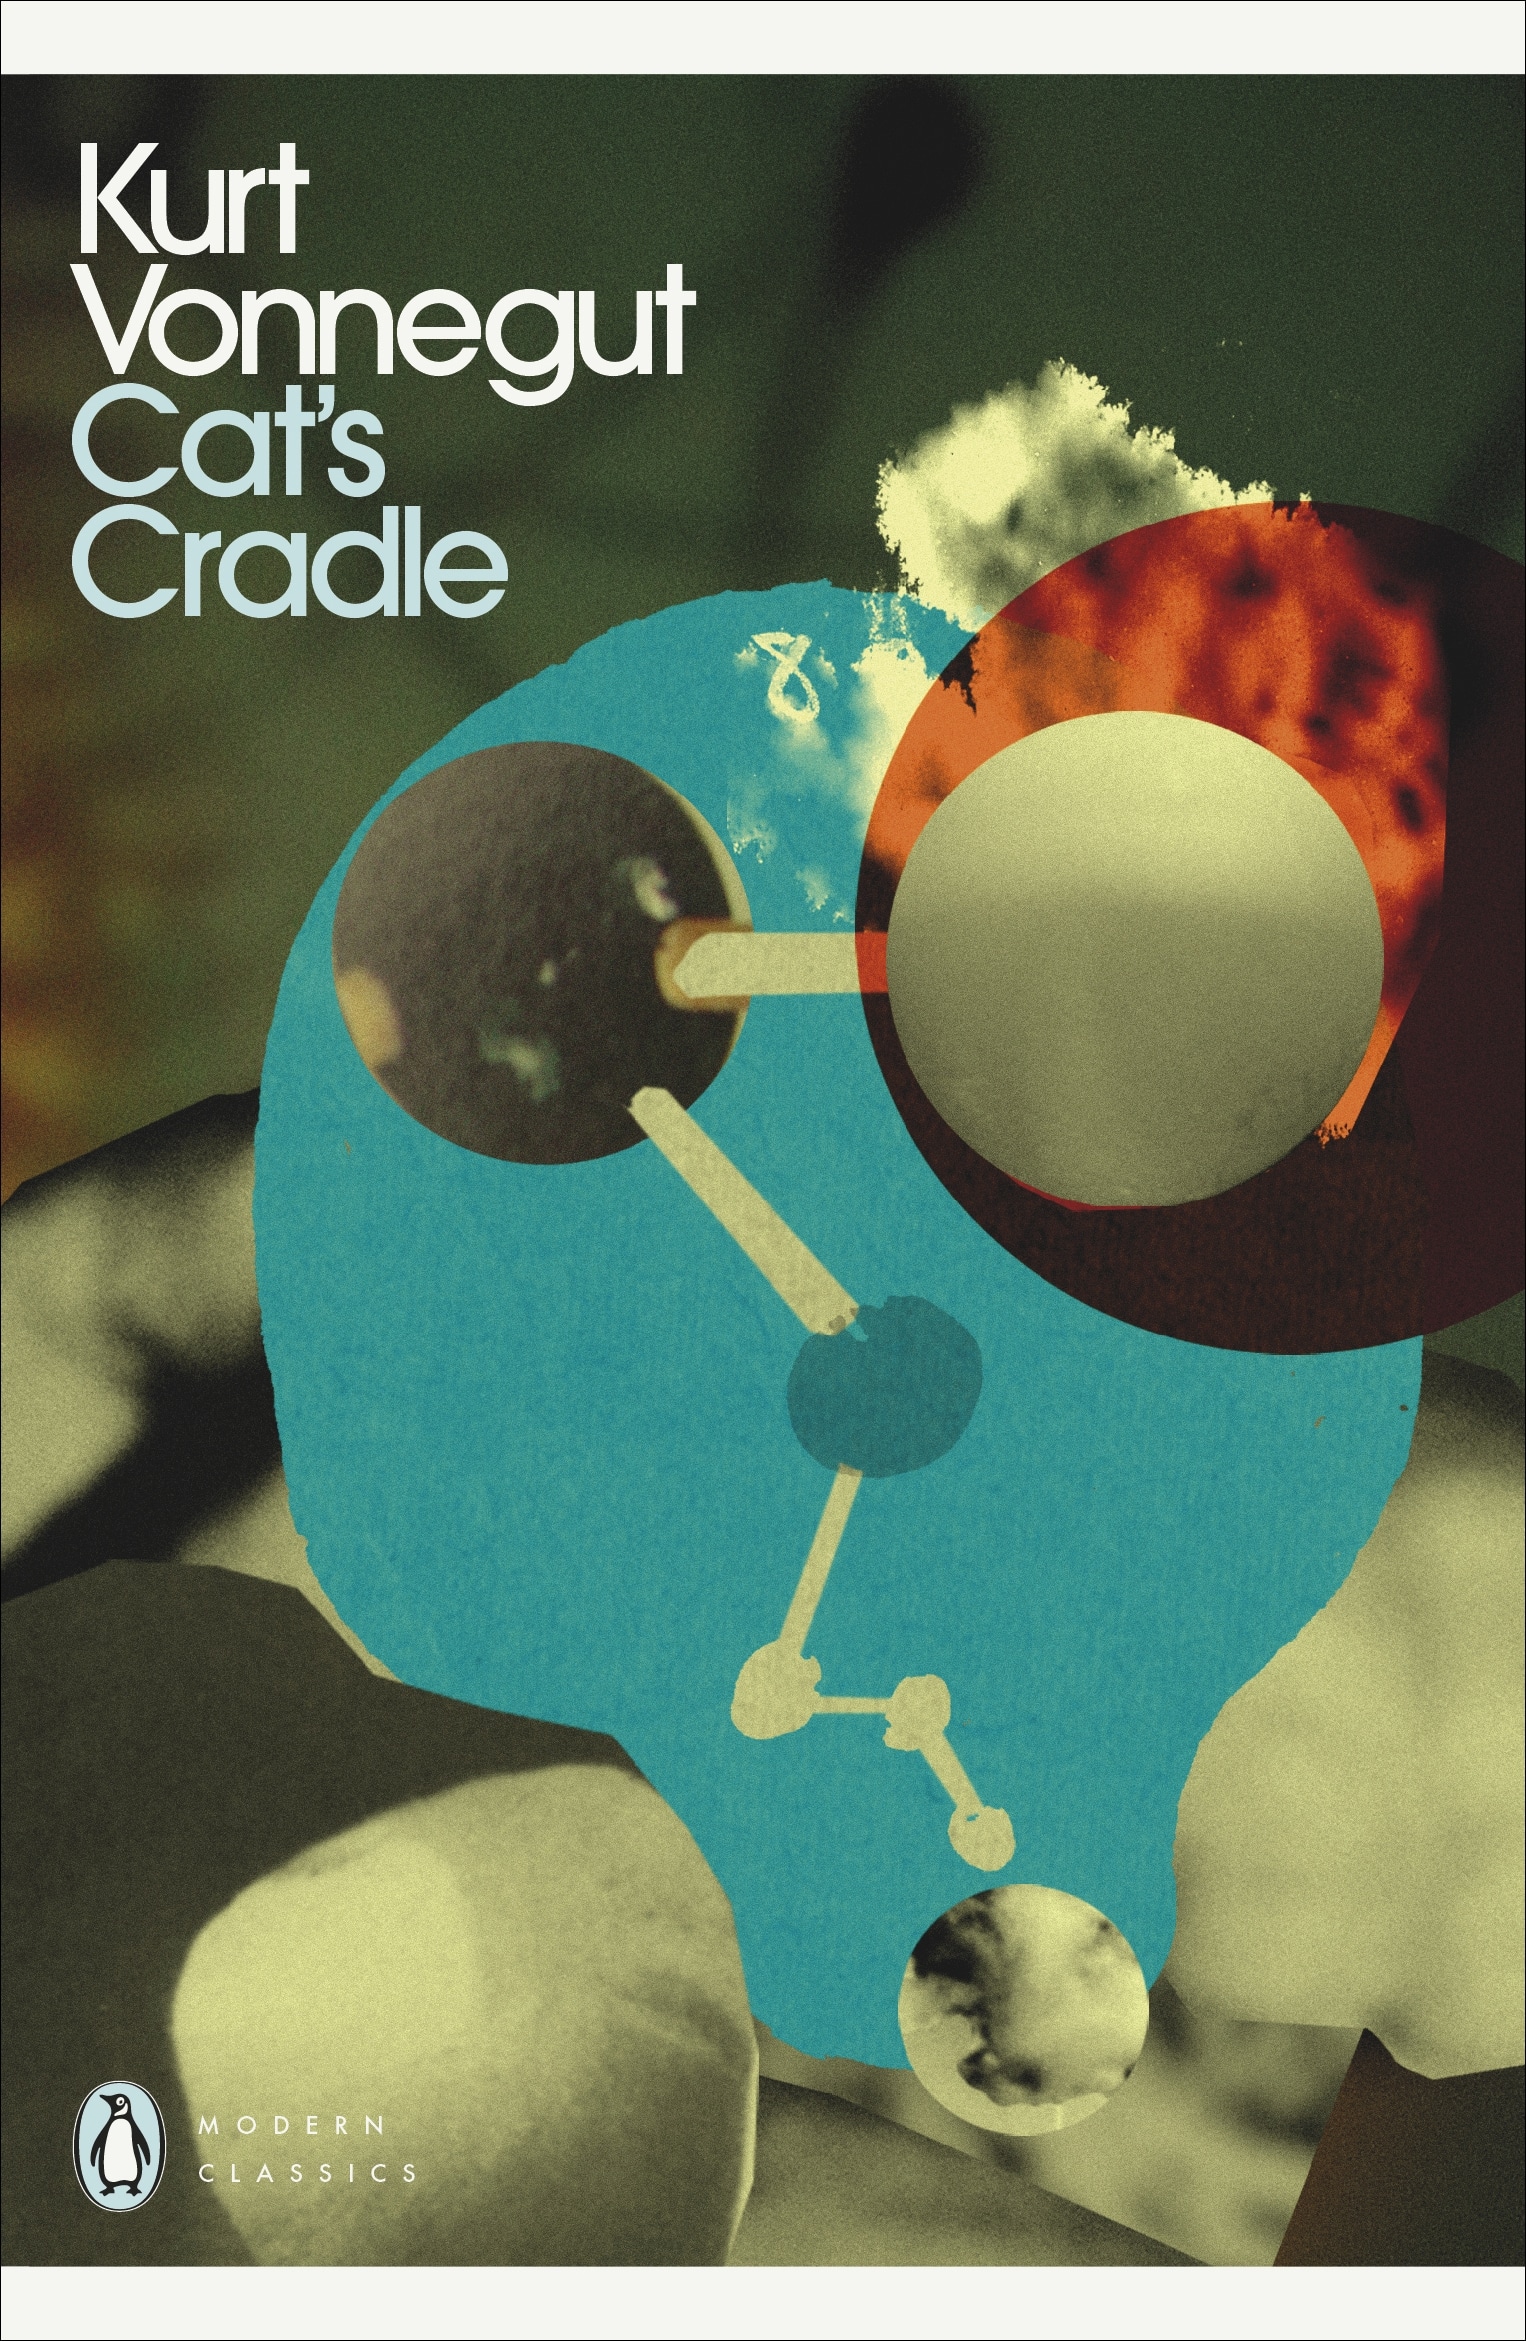 Book “Cat's Cradle” by Kurt Vonnegut — May 1, 2008